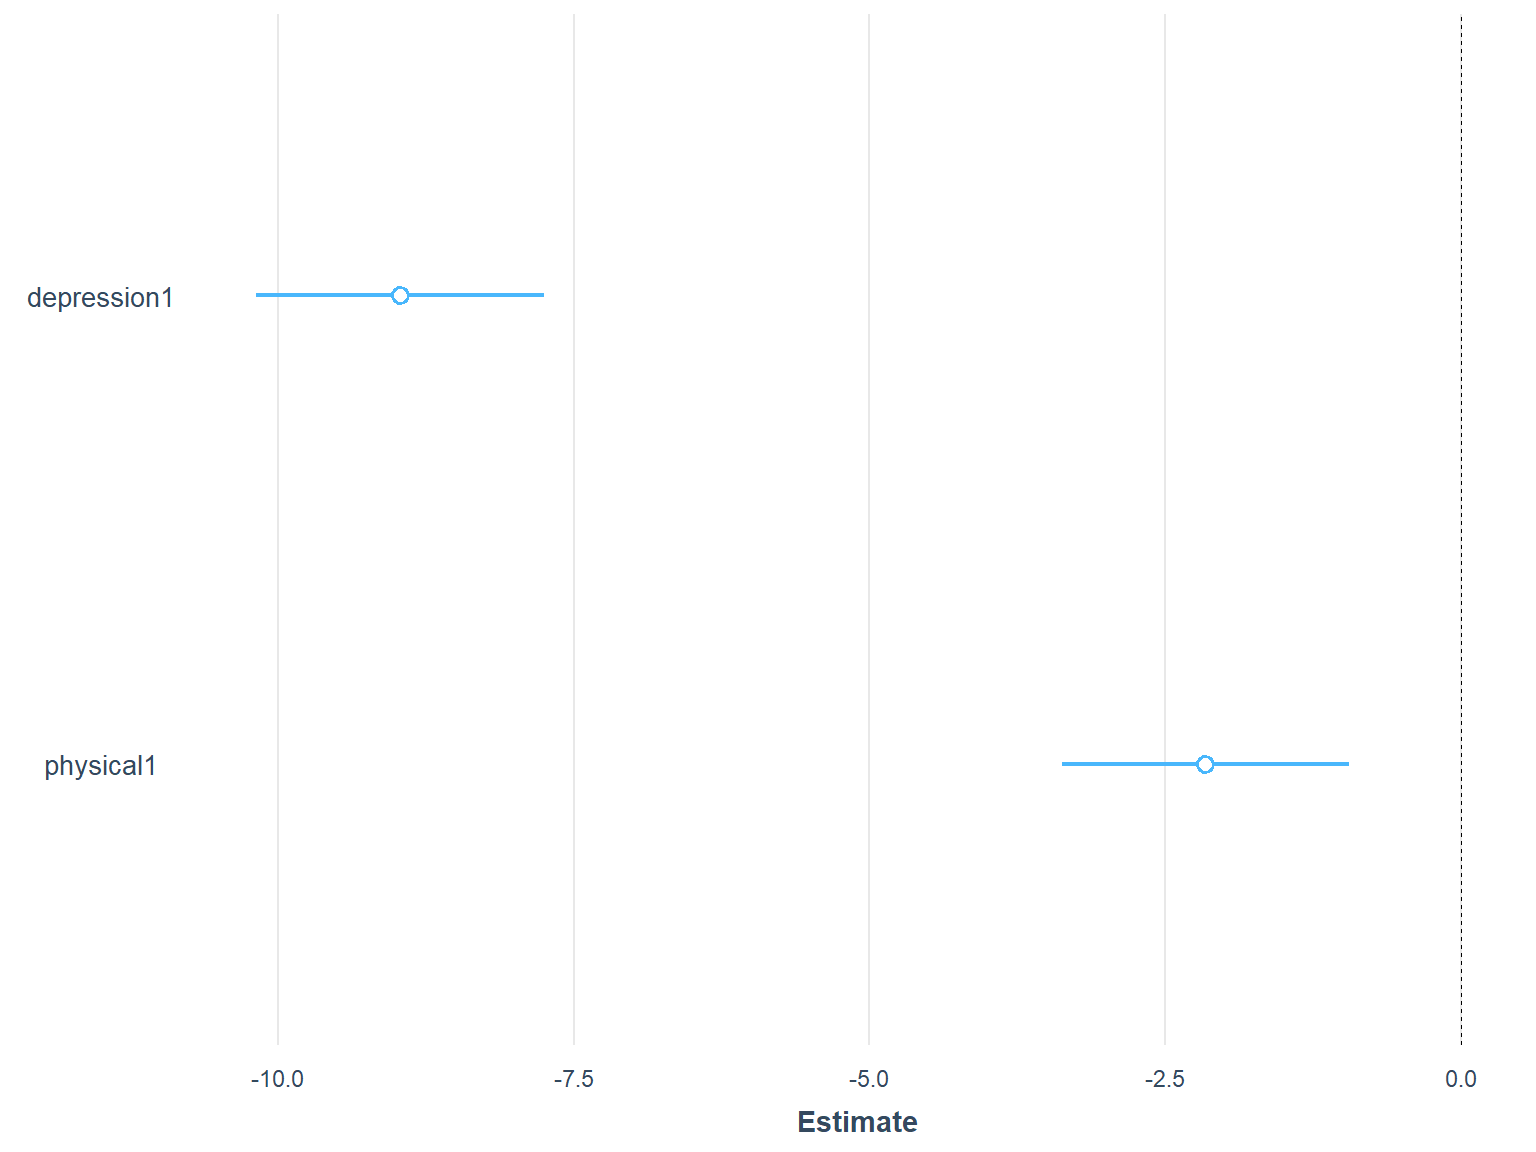 Standardized regression coefficients in Model 2